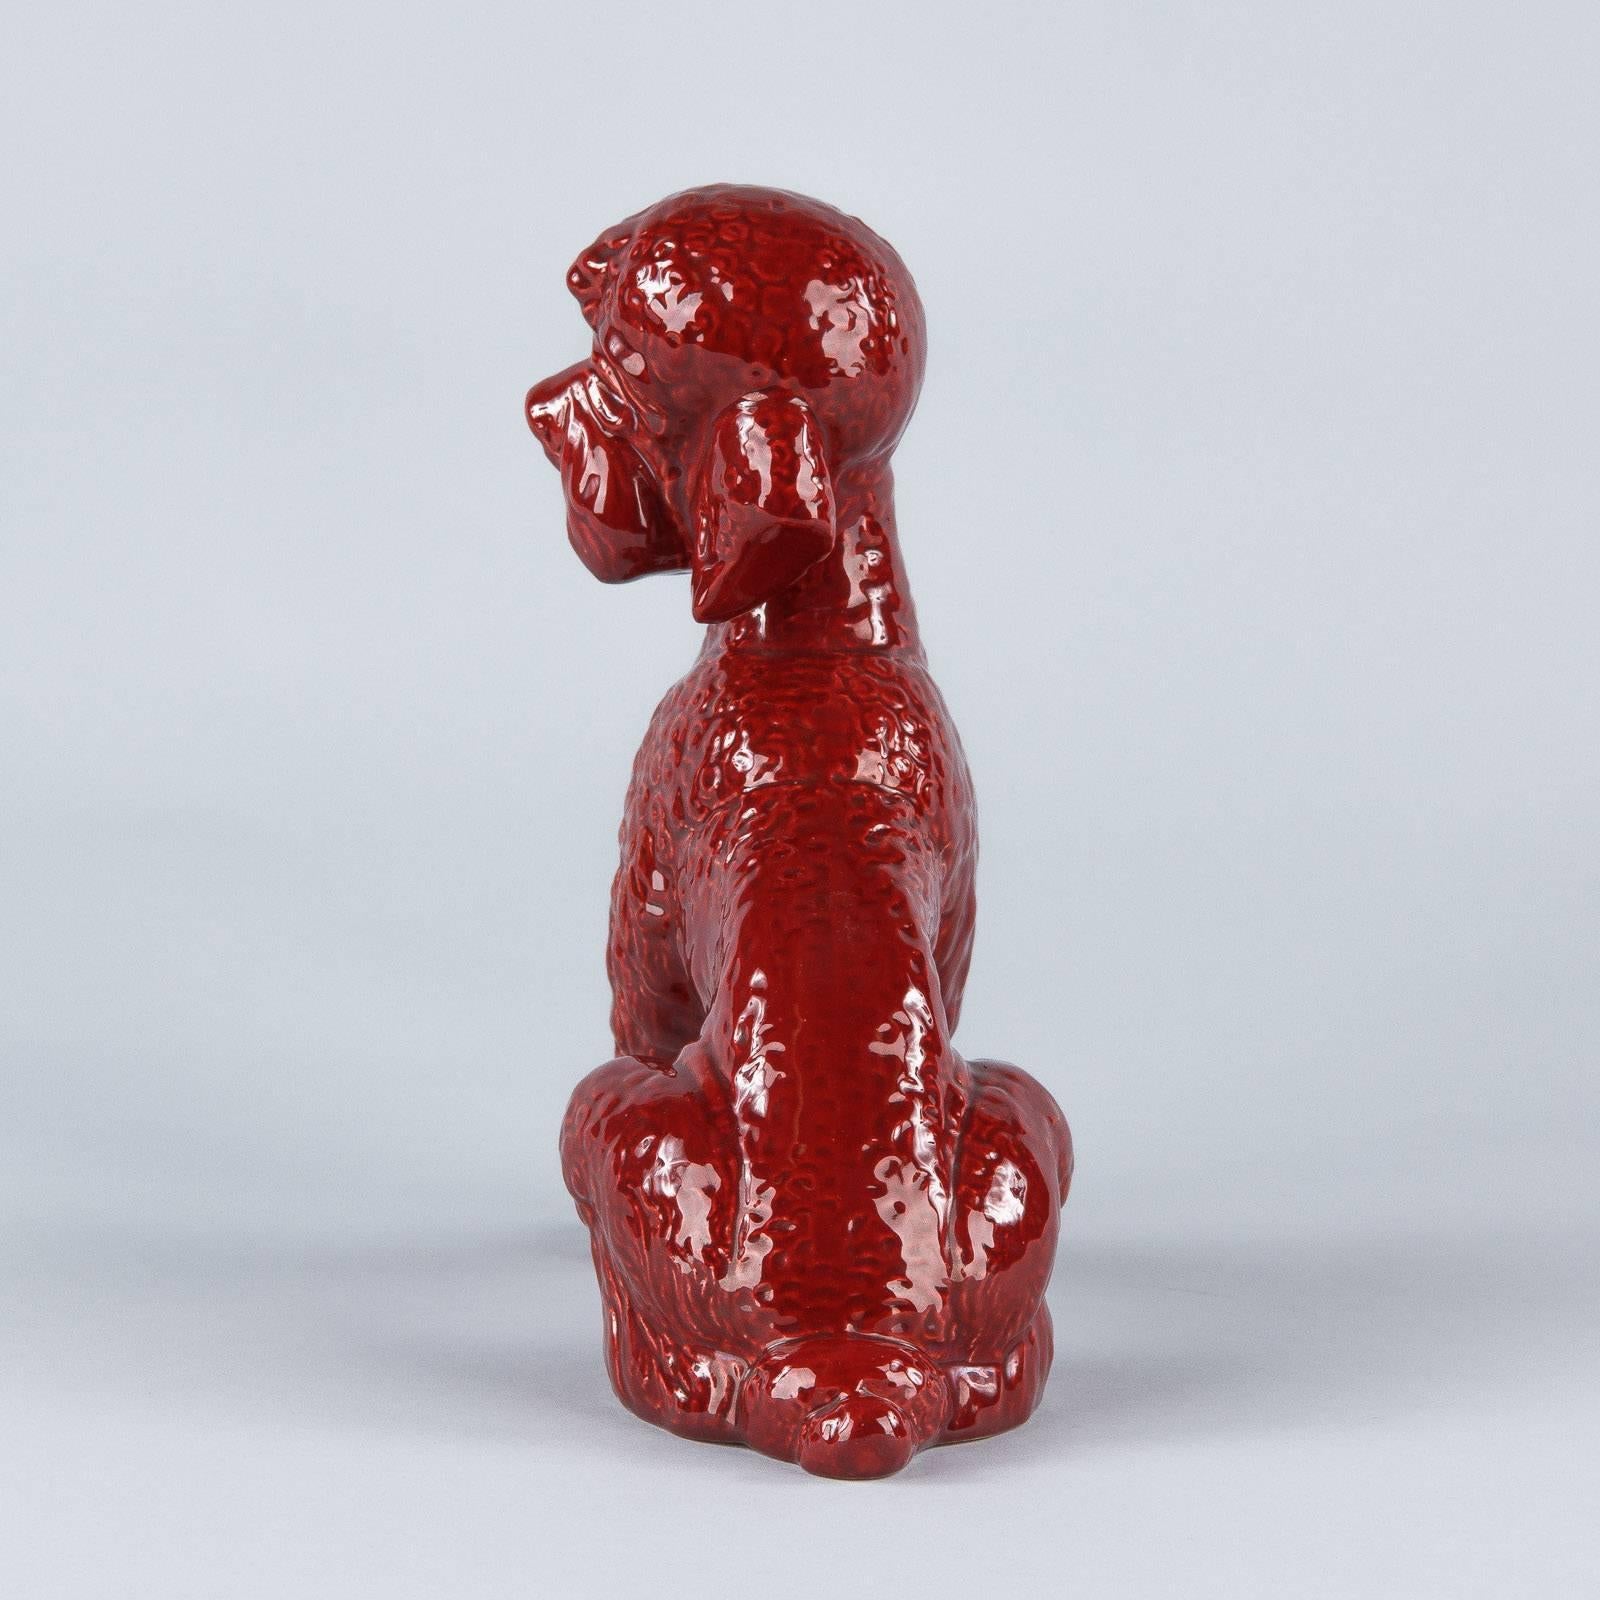 Glazed French Red Ceramic Poodle Dog Sculpture, 1950s